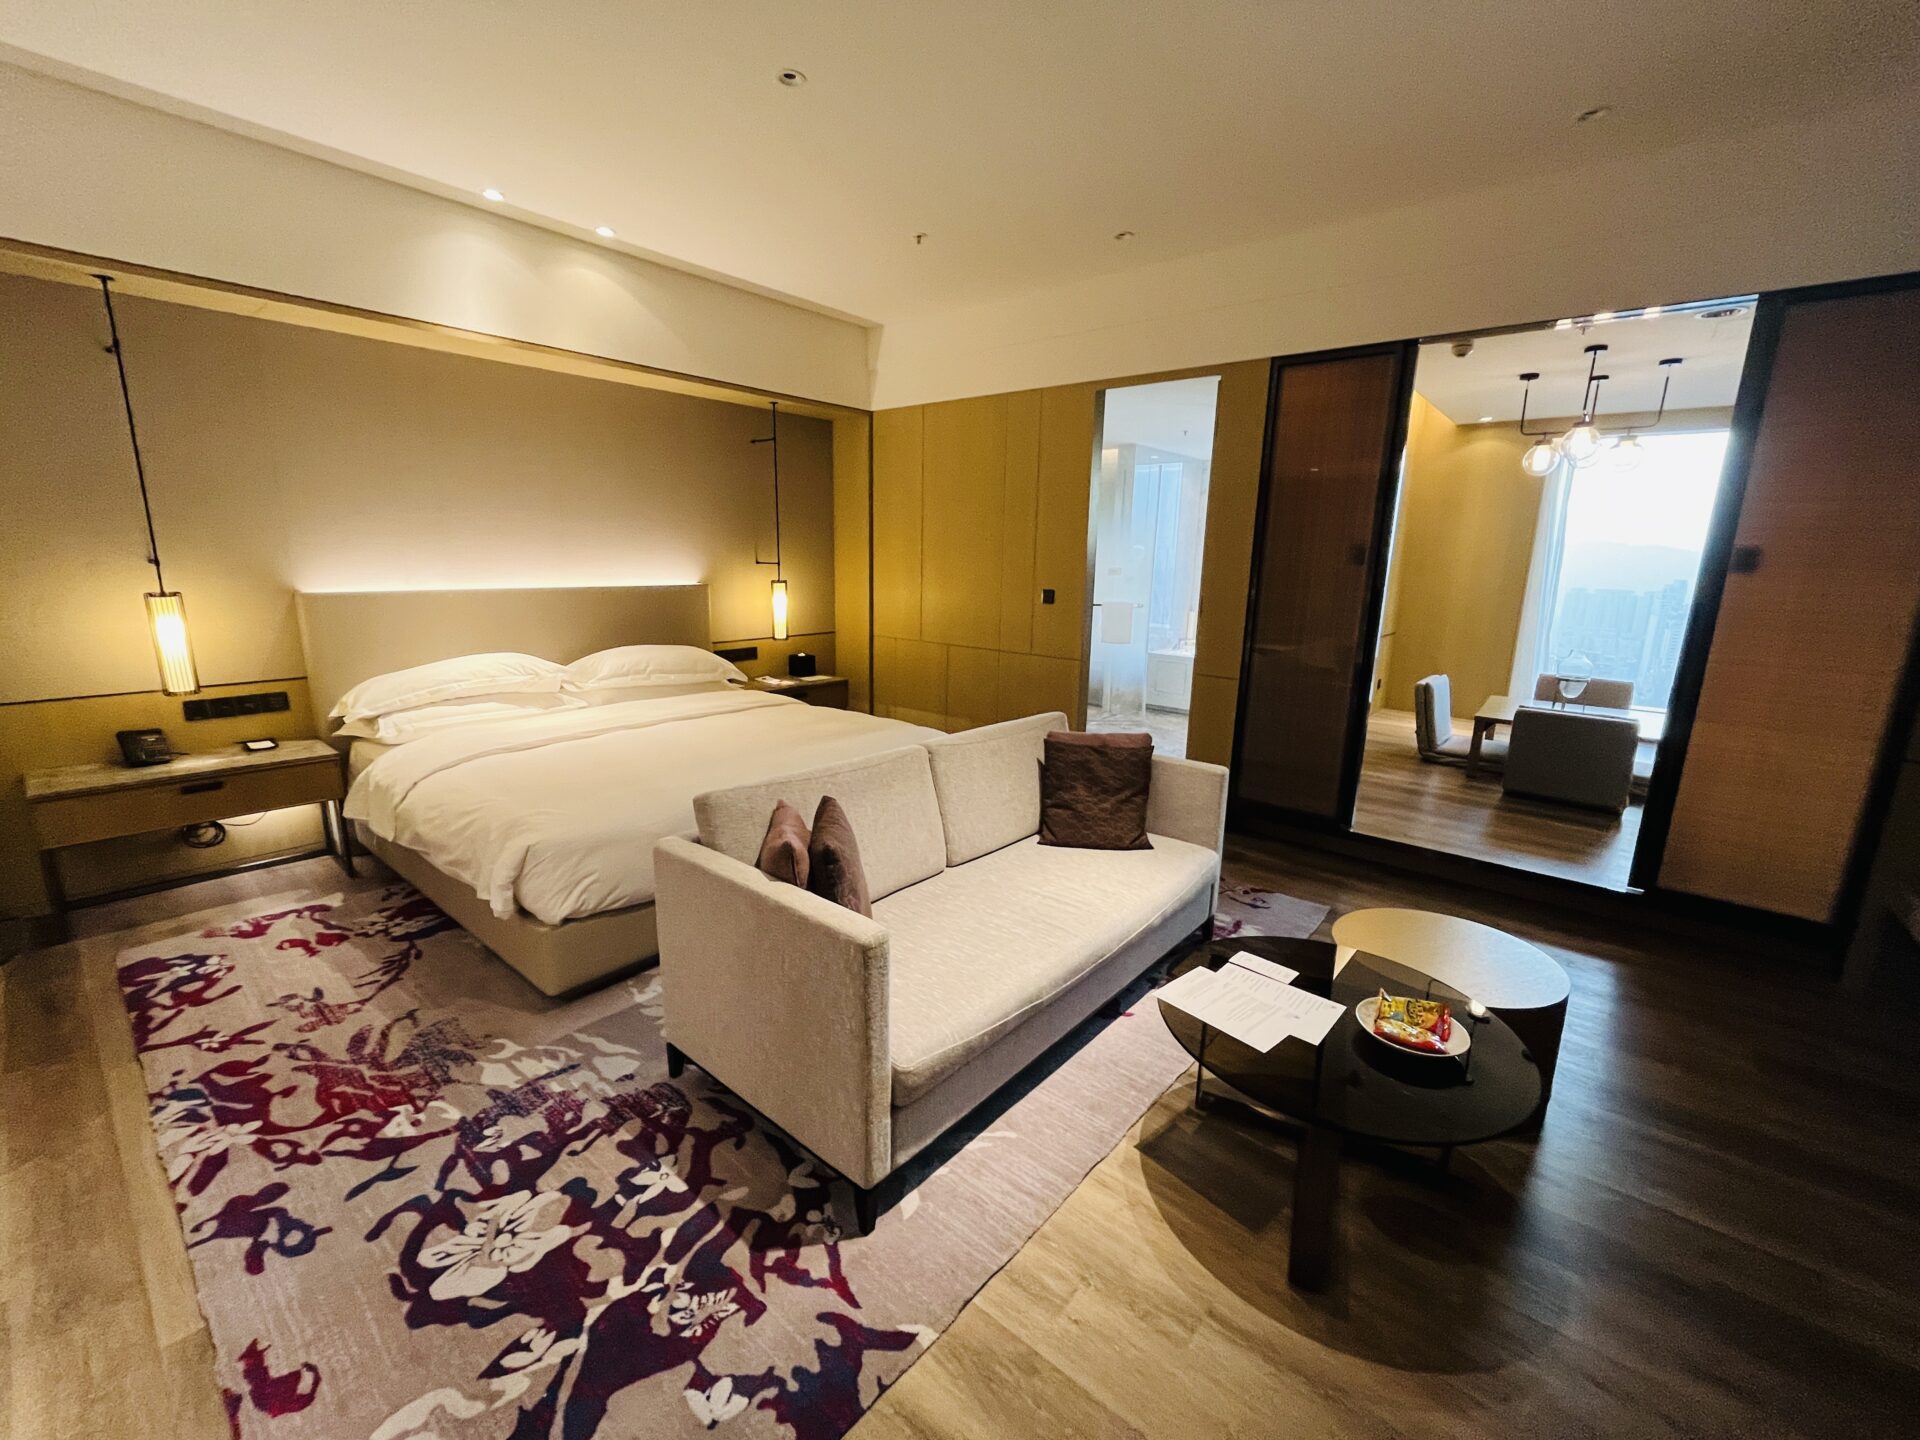 Review Marriott Platinum Suite Upgrade & Benefits at Kaohsiung Marriott Hotel in Taiwan